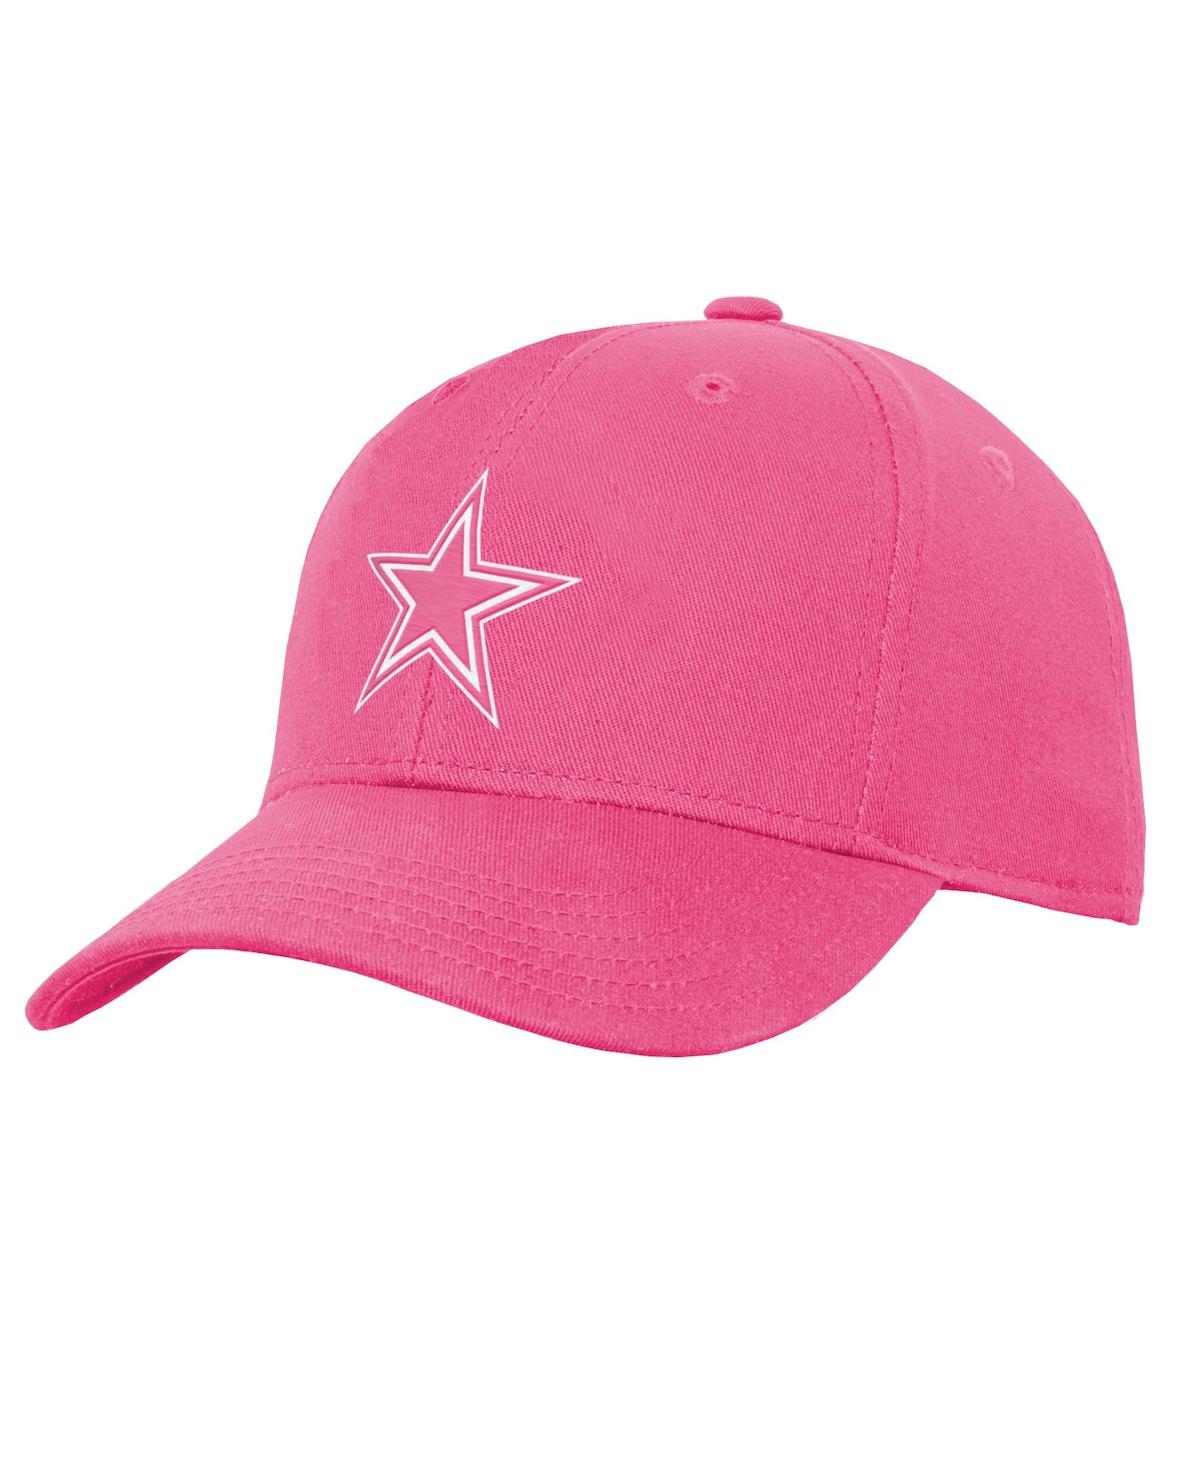 Shop Outerstuff Big Girls Pink Dallas Cowboys Adjustable Hat